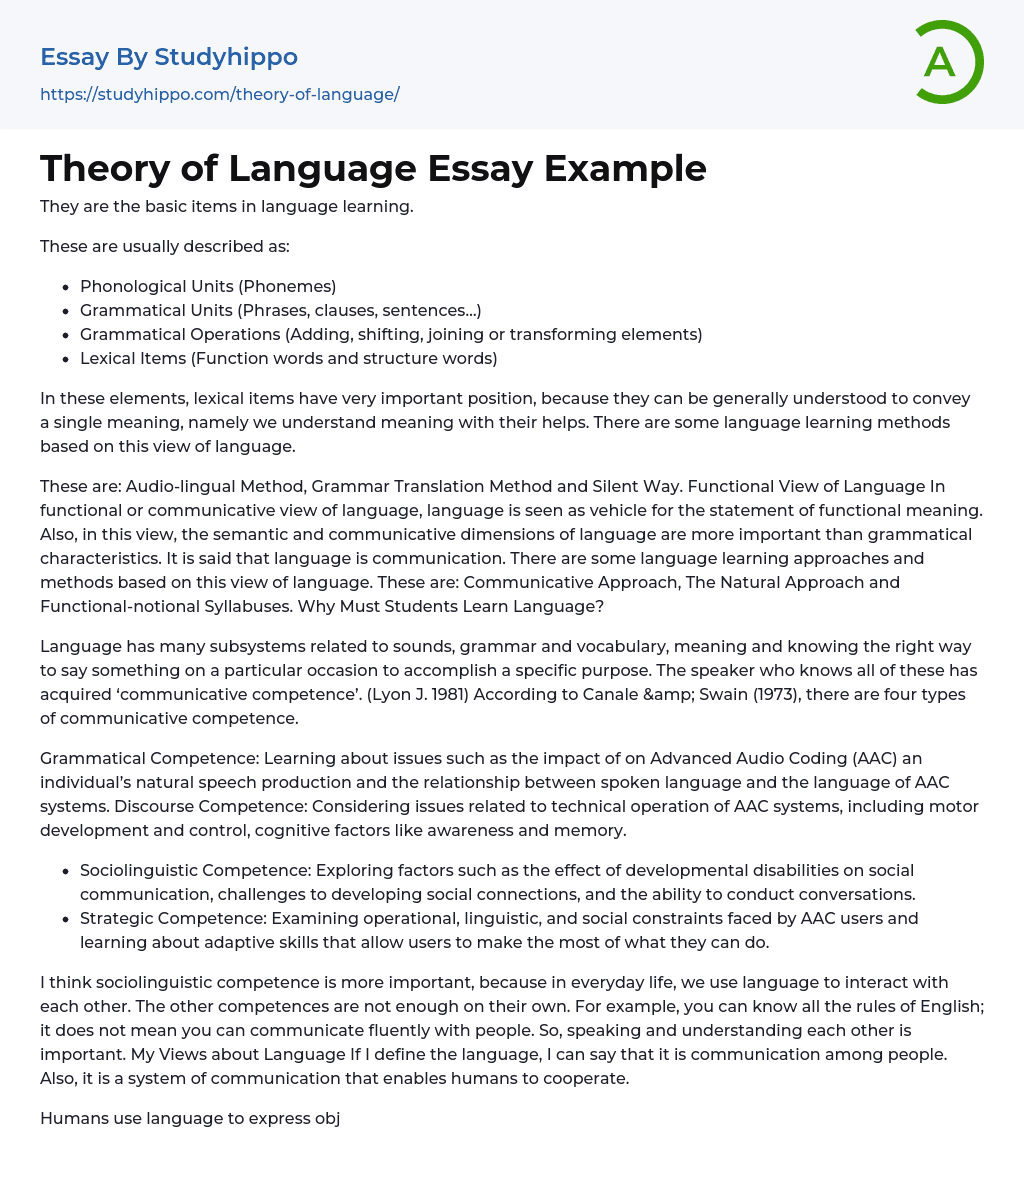 Theory of Language Essay Example